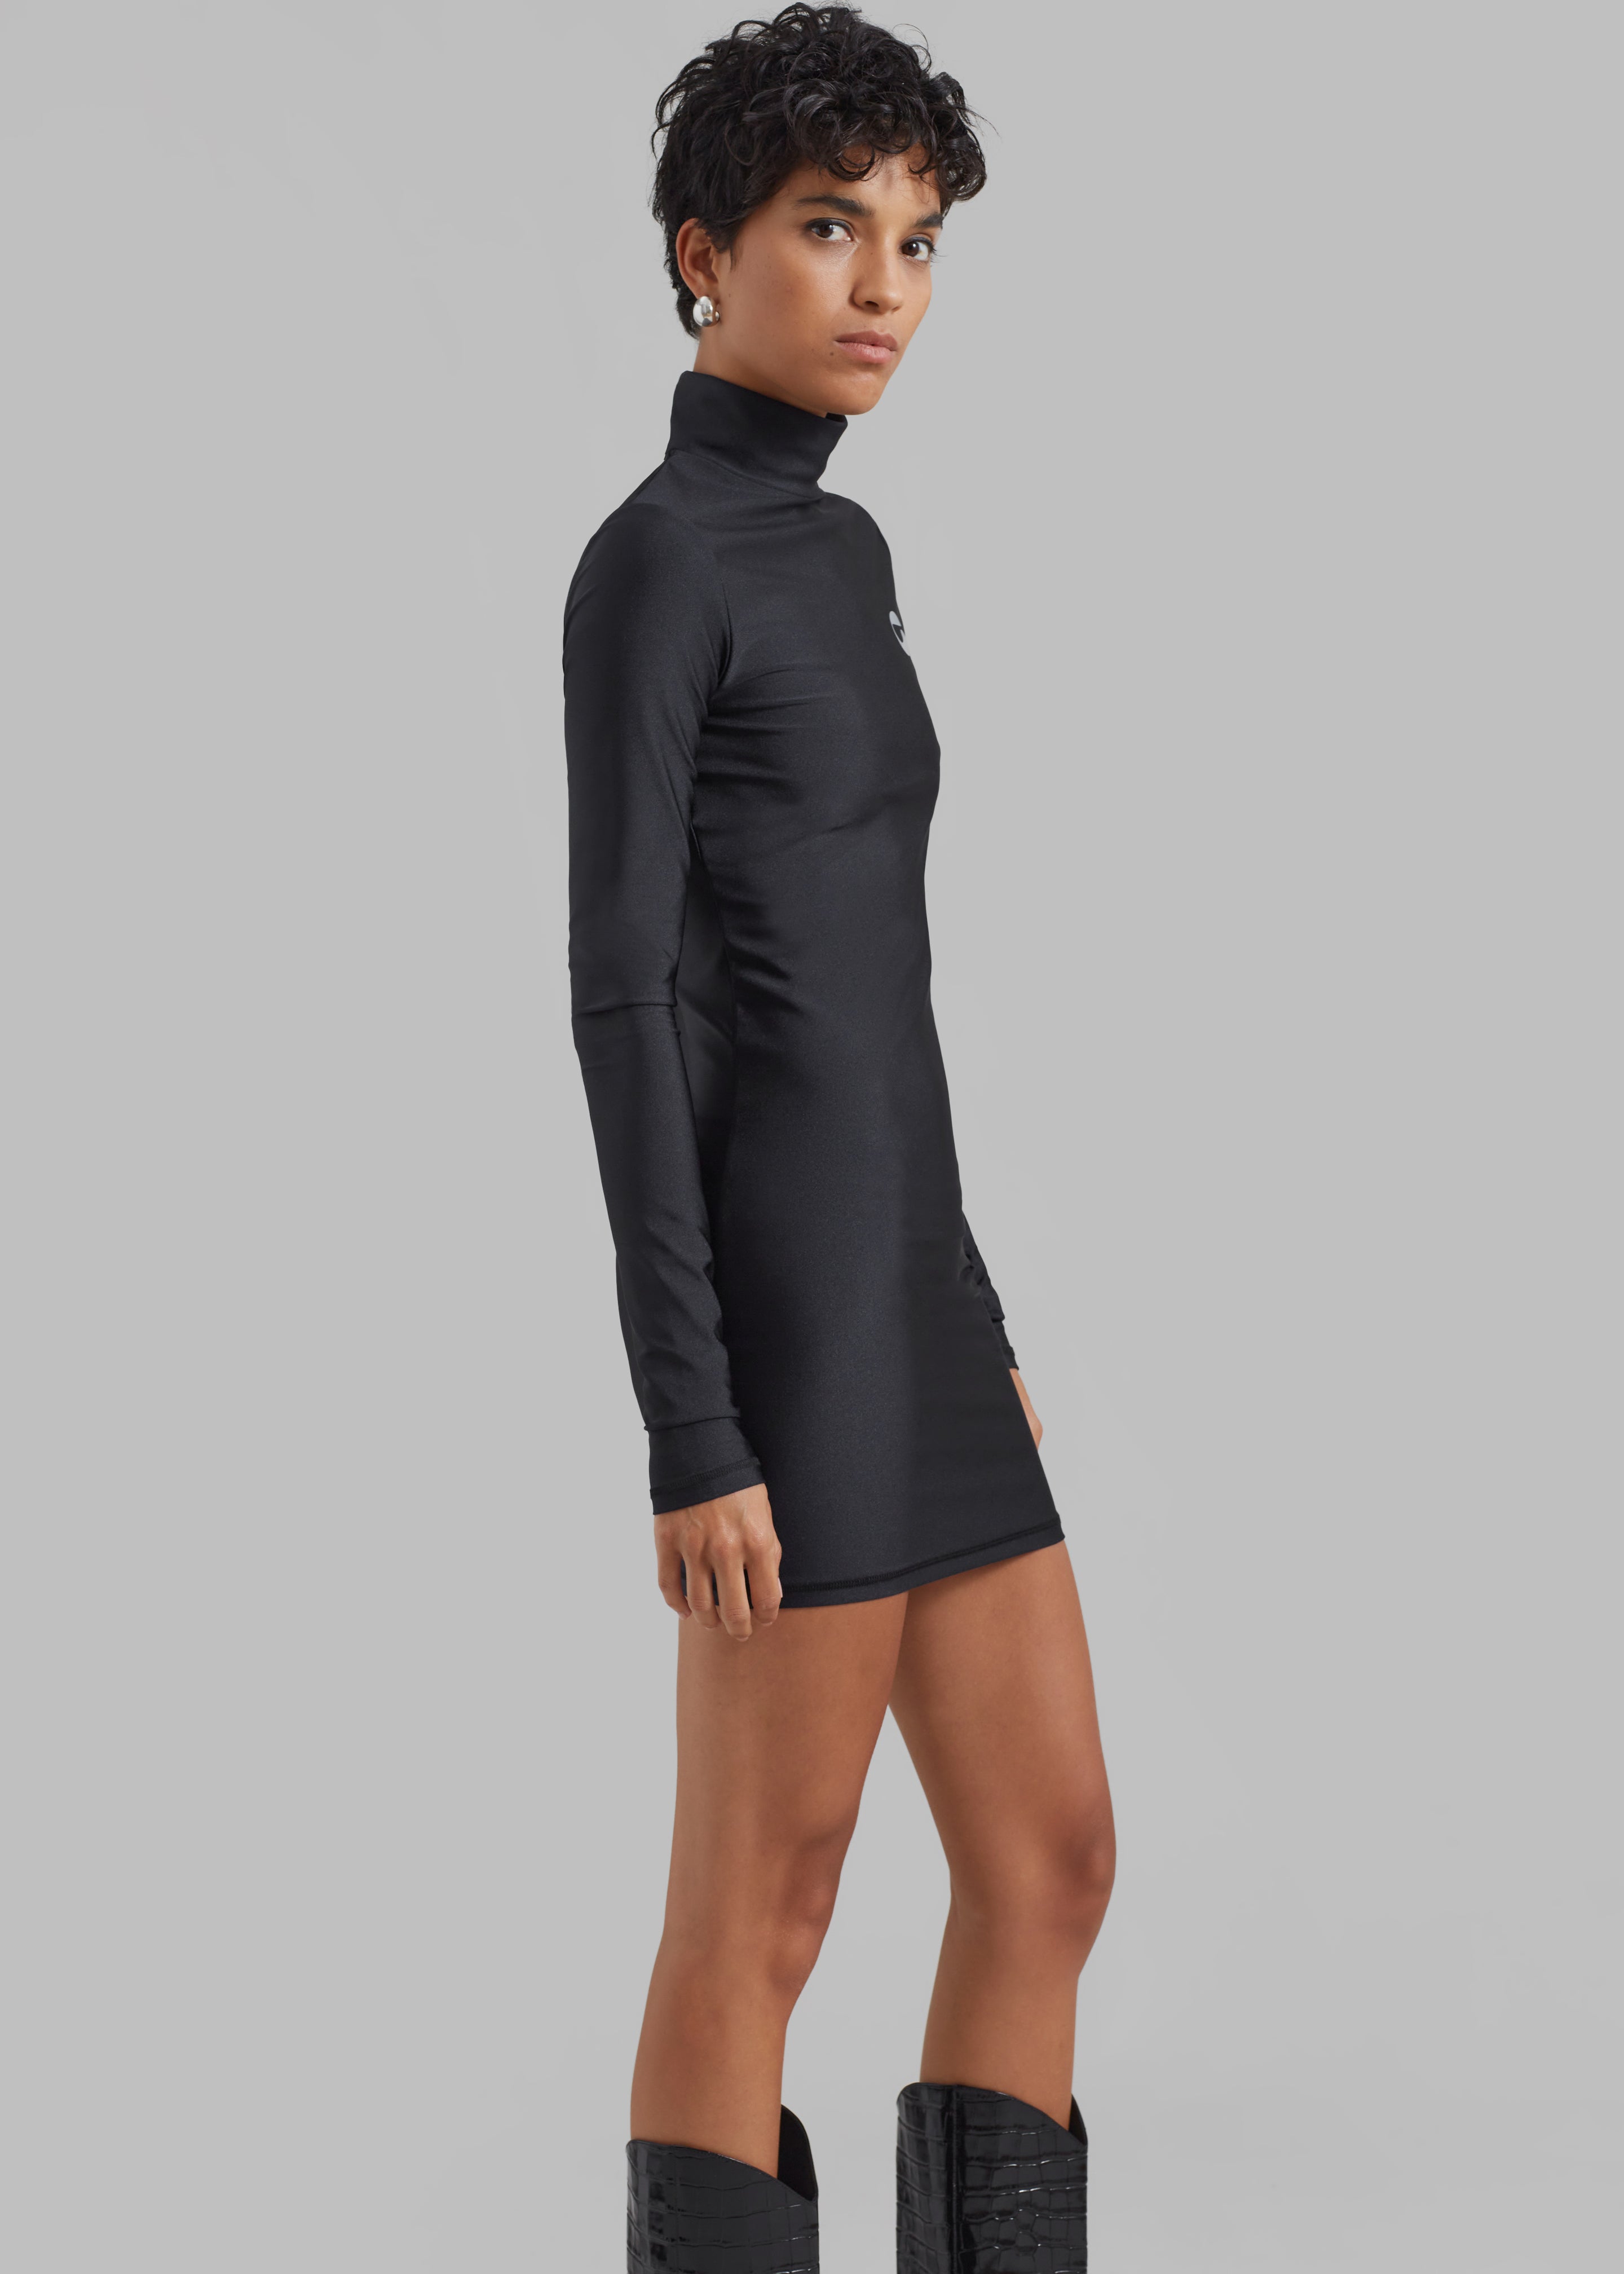 Coperni High Neck Fitted Mini Dress - Black - 8